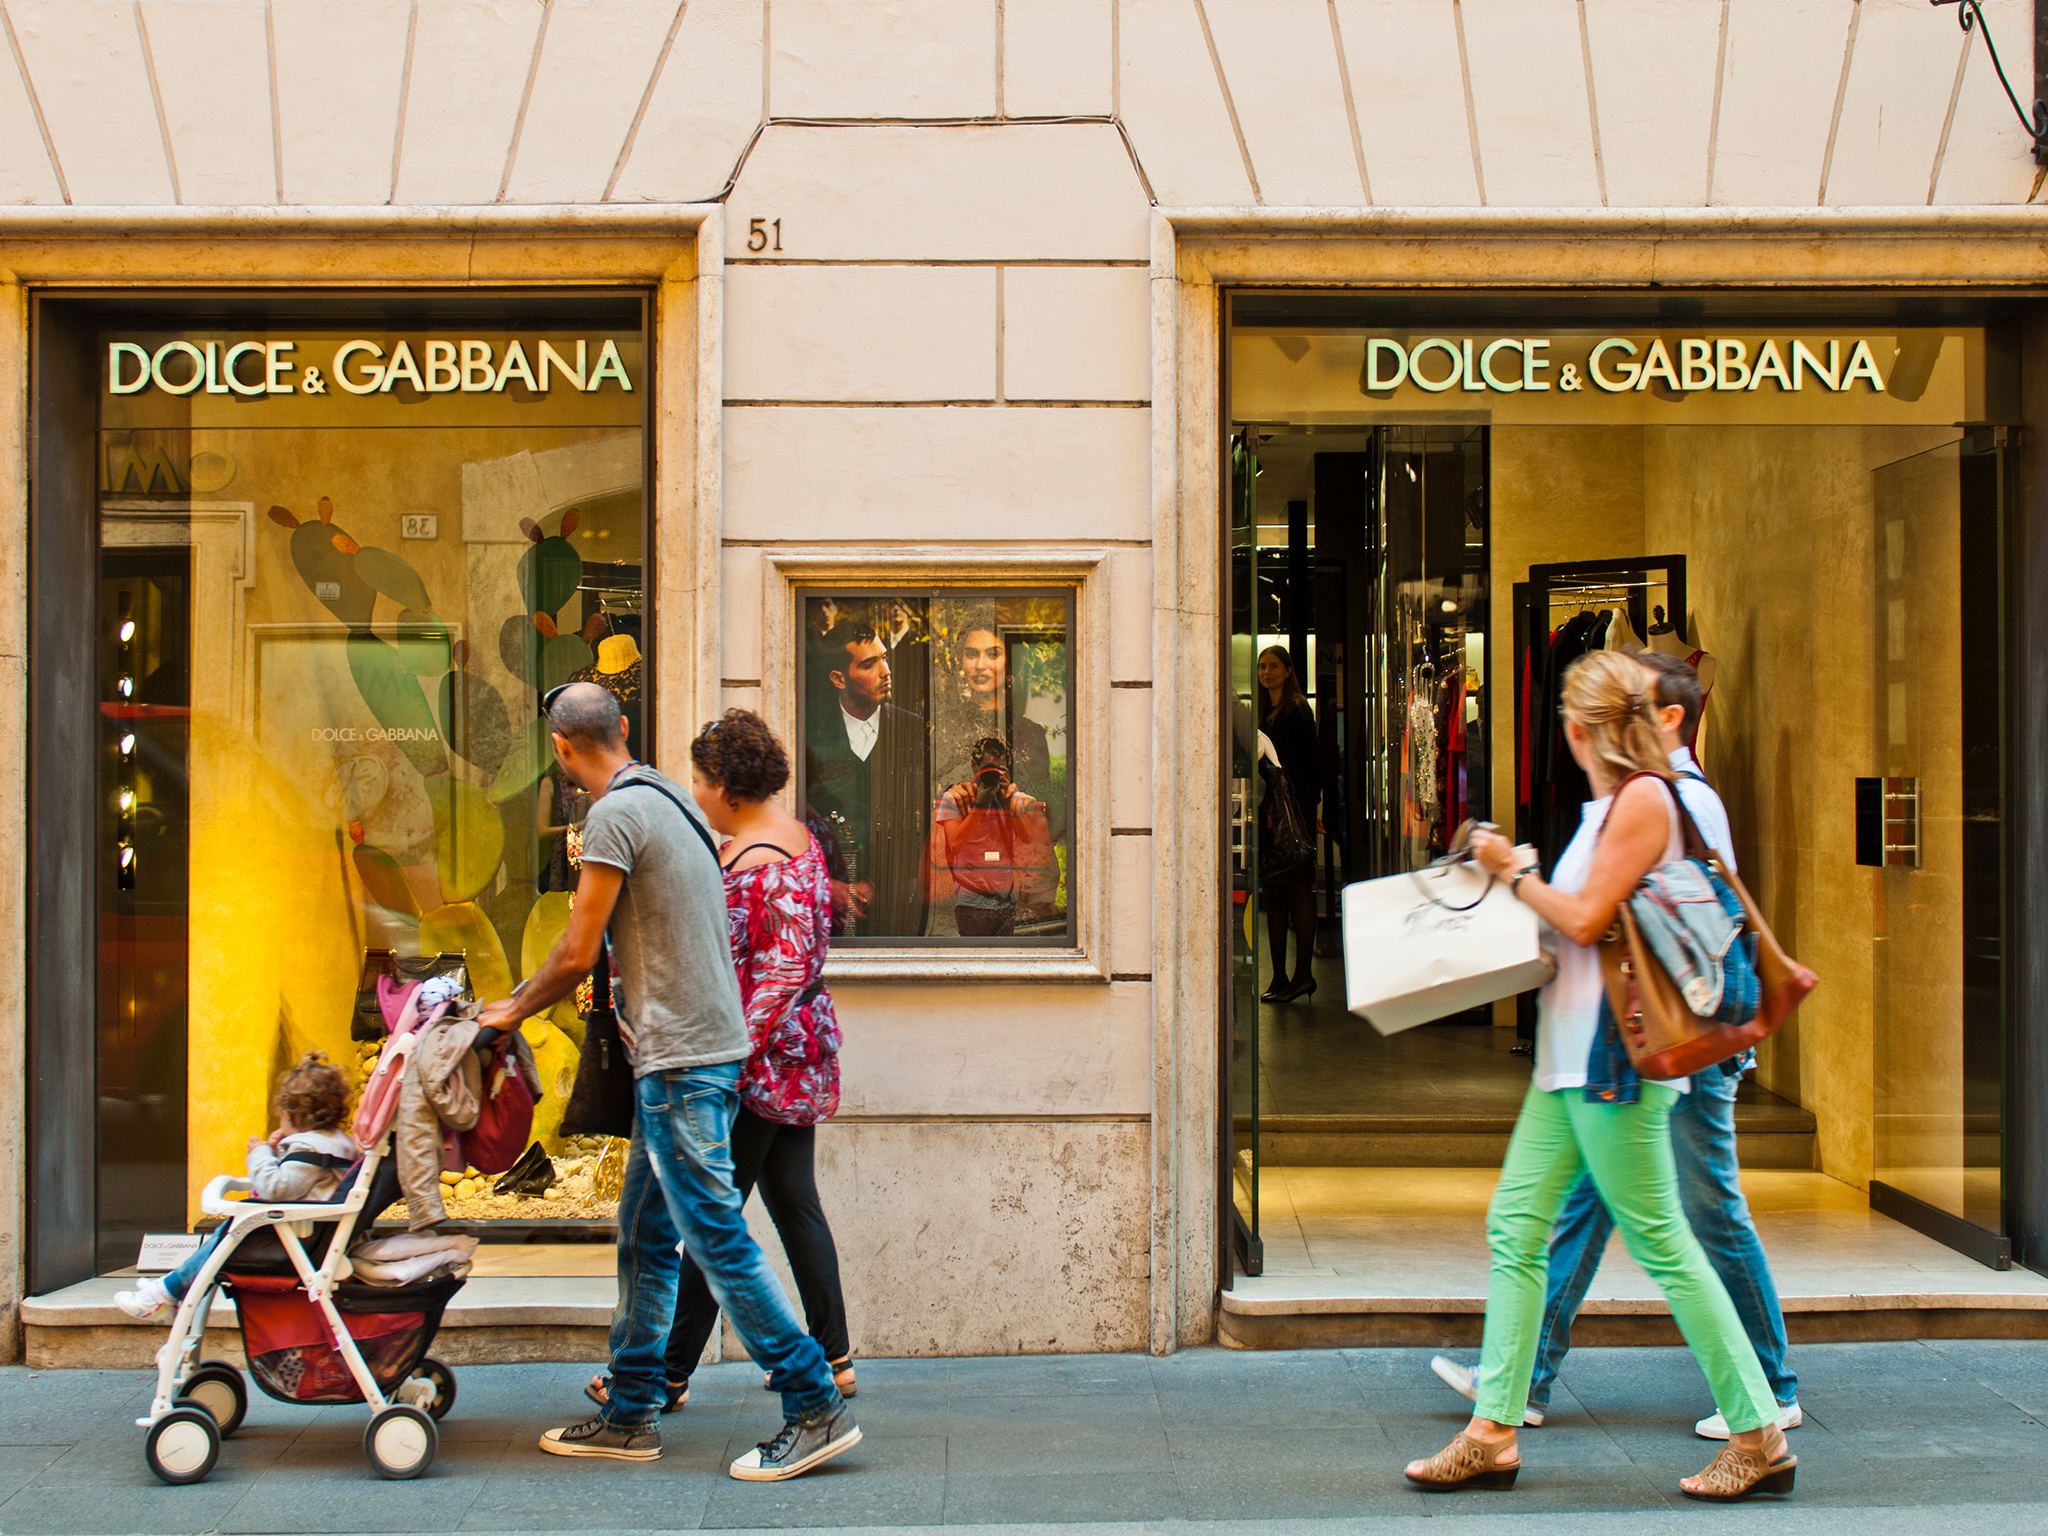 Main Shopping Street In Rome